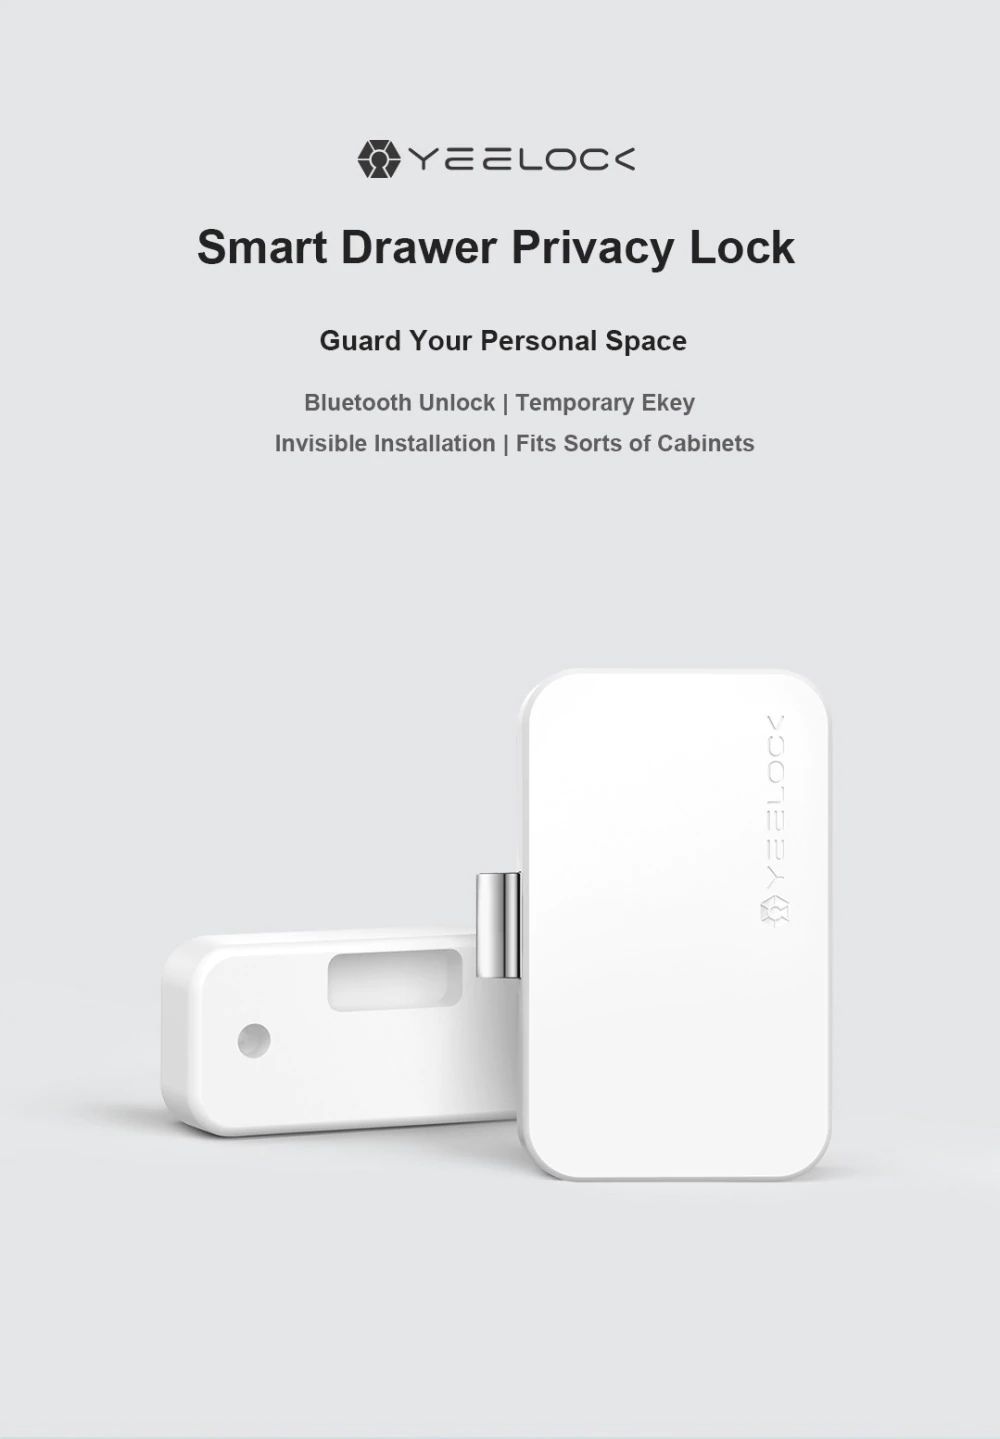 Mi Yeelock Smart Bluetooth Drawer Privacy Lock (5)